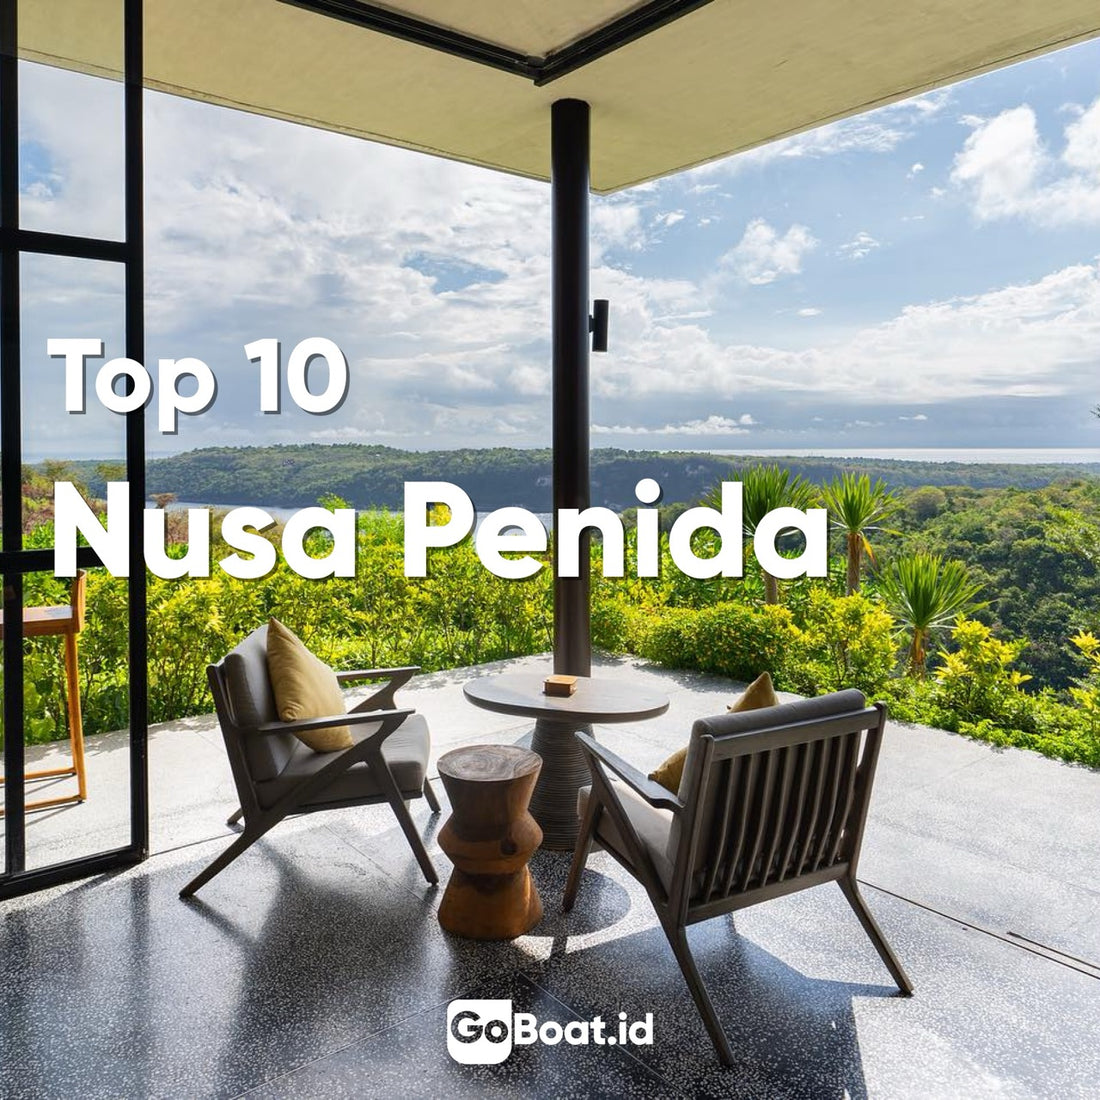 Top 10 Nusa Penida